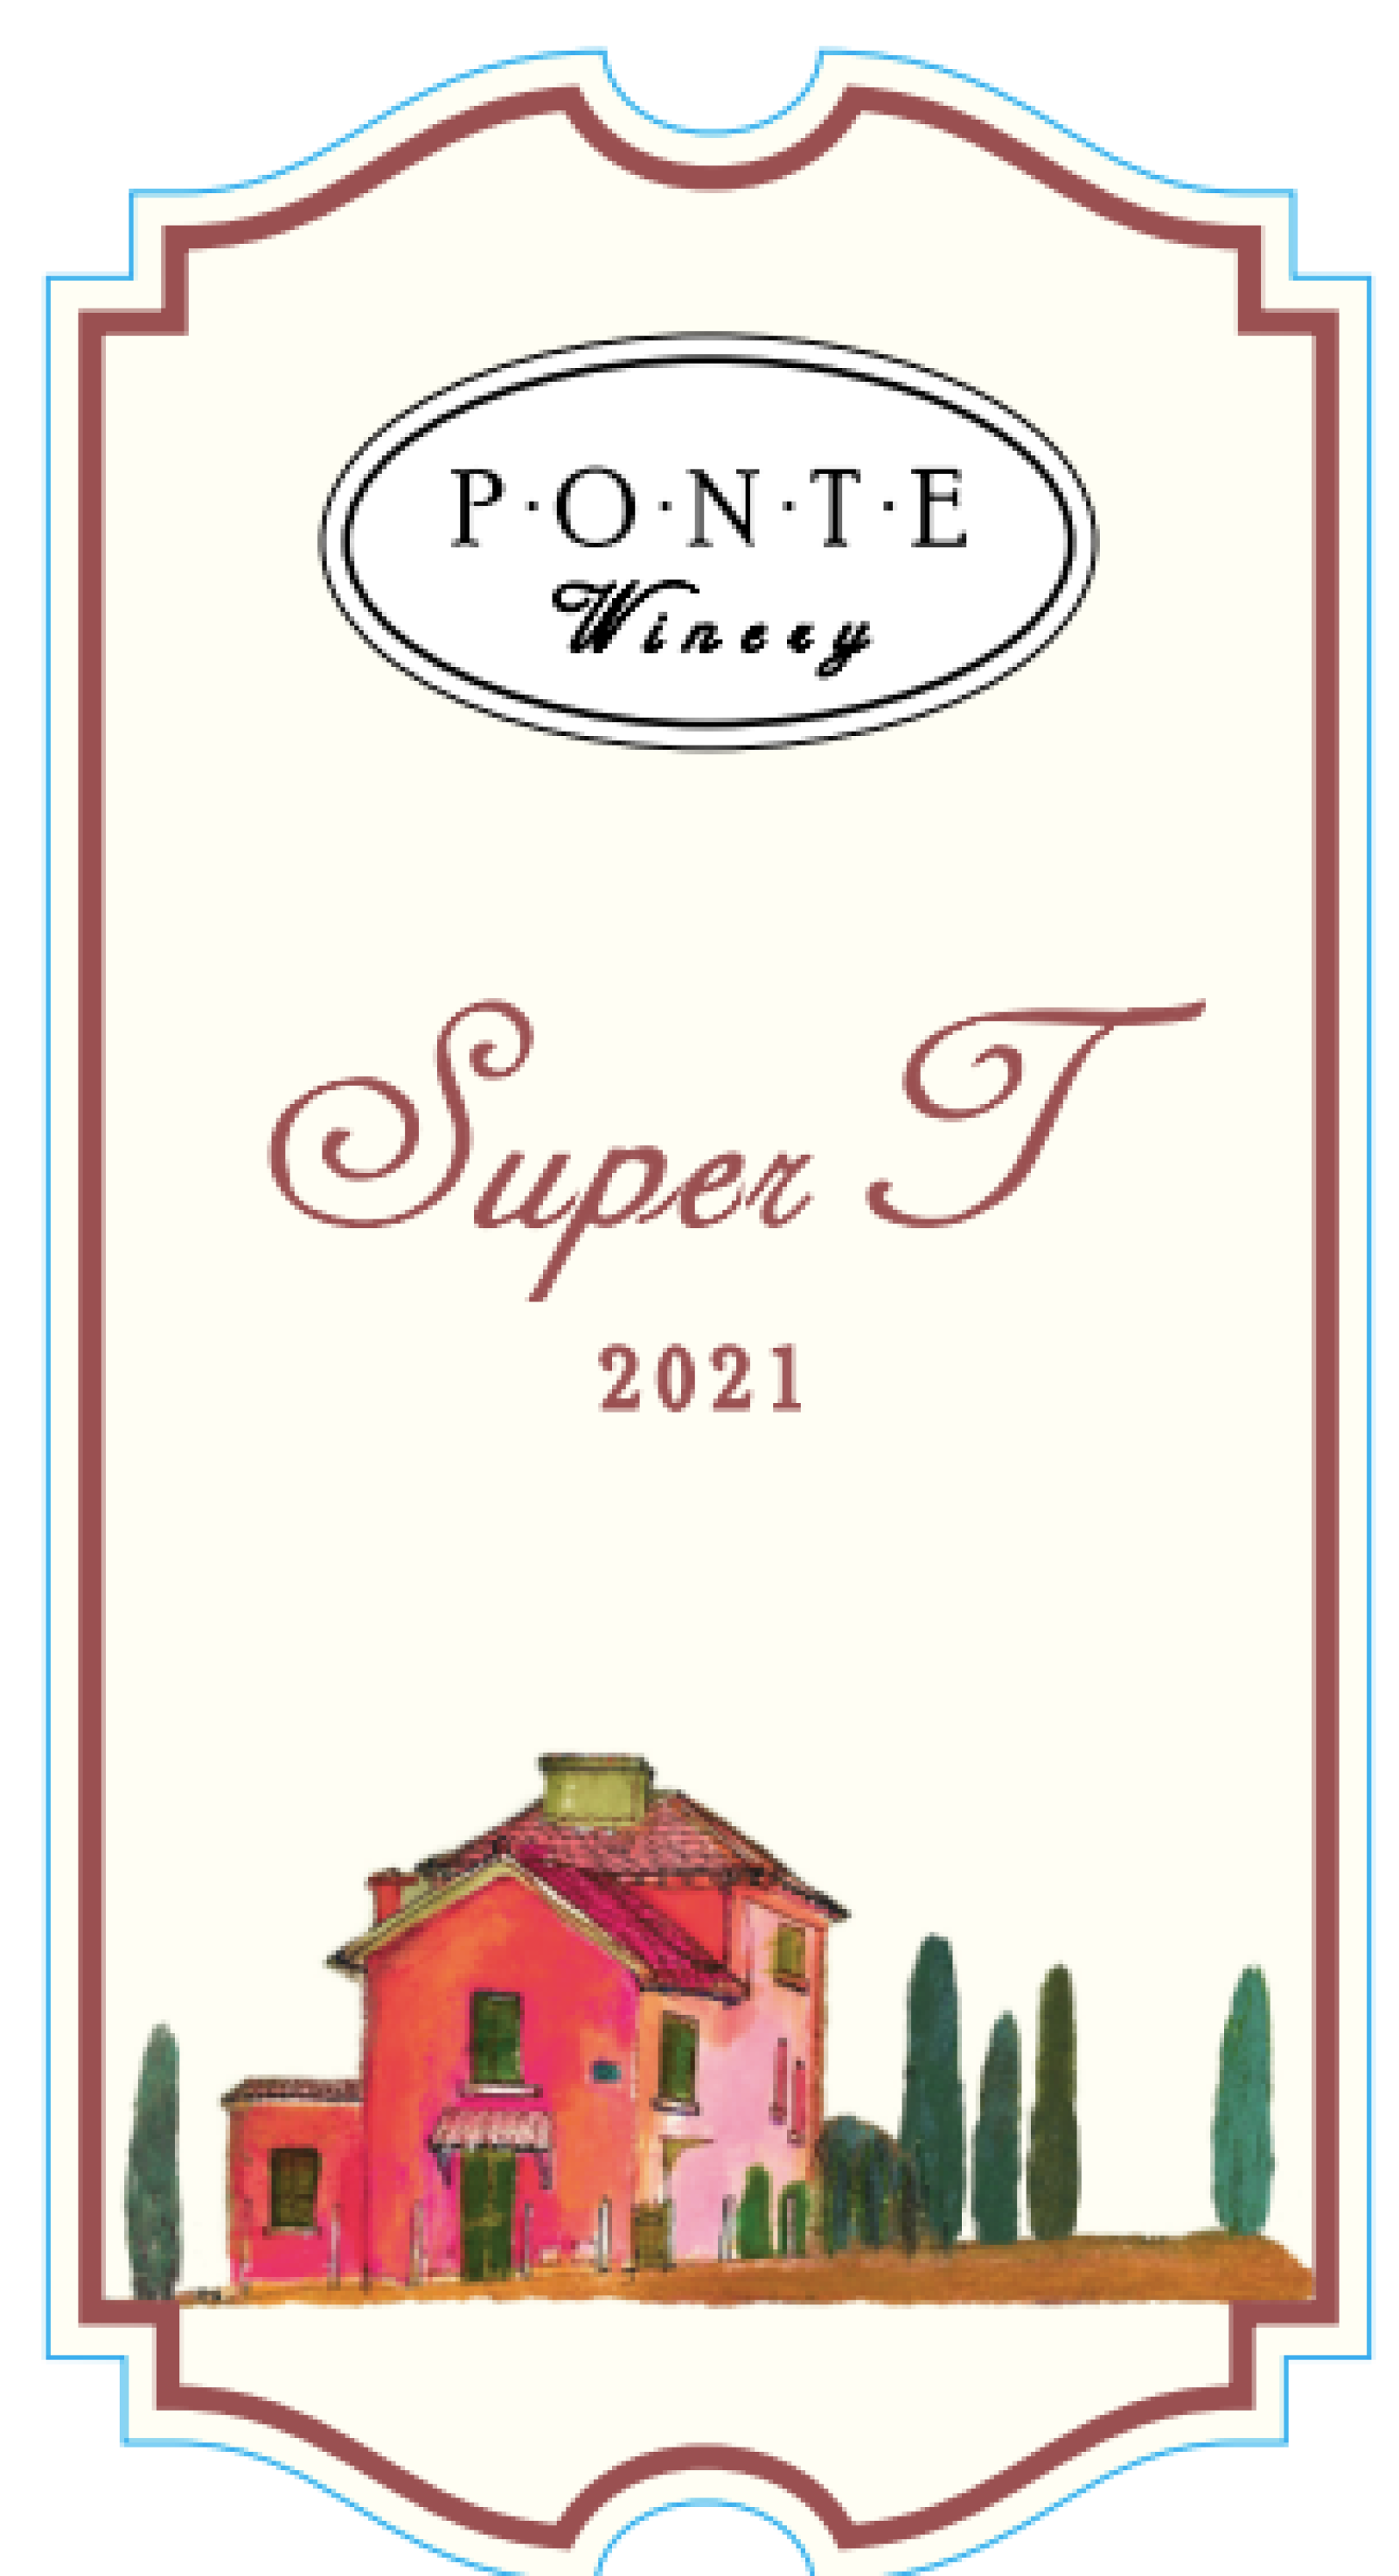 Super T 2021